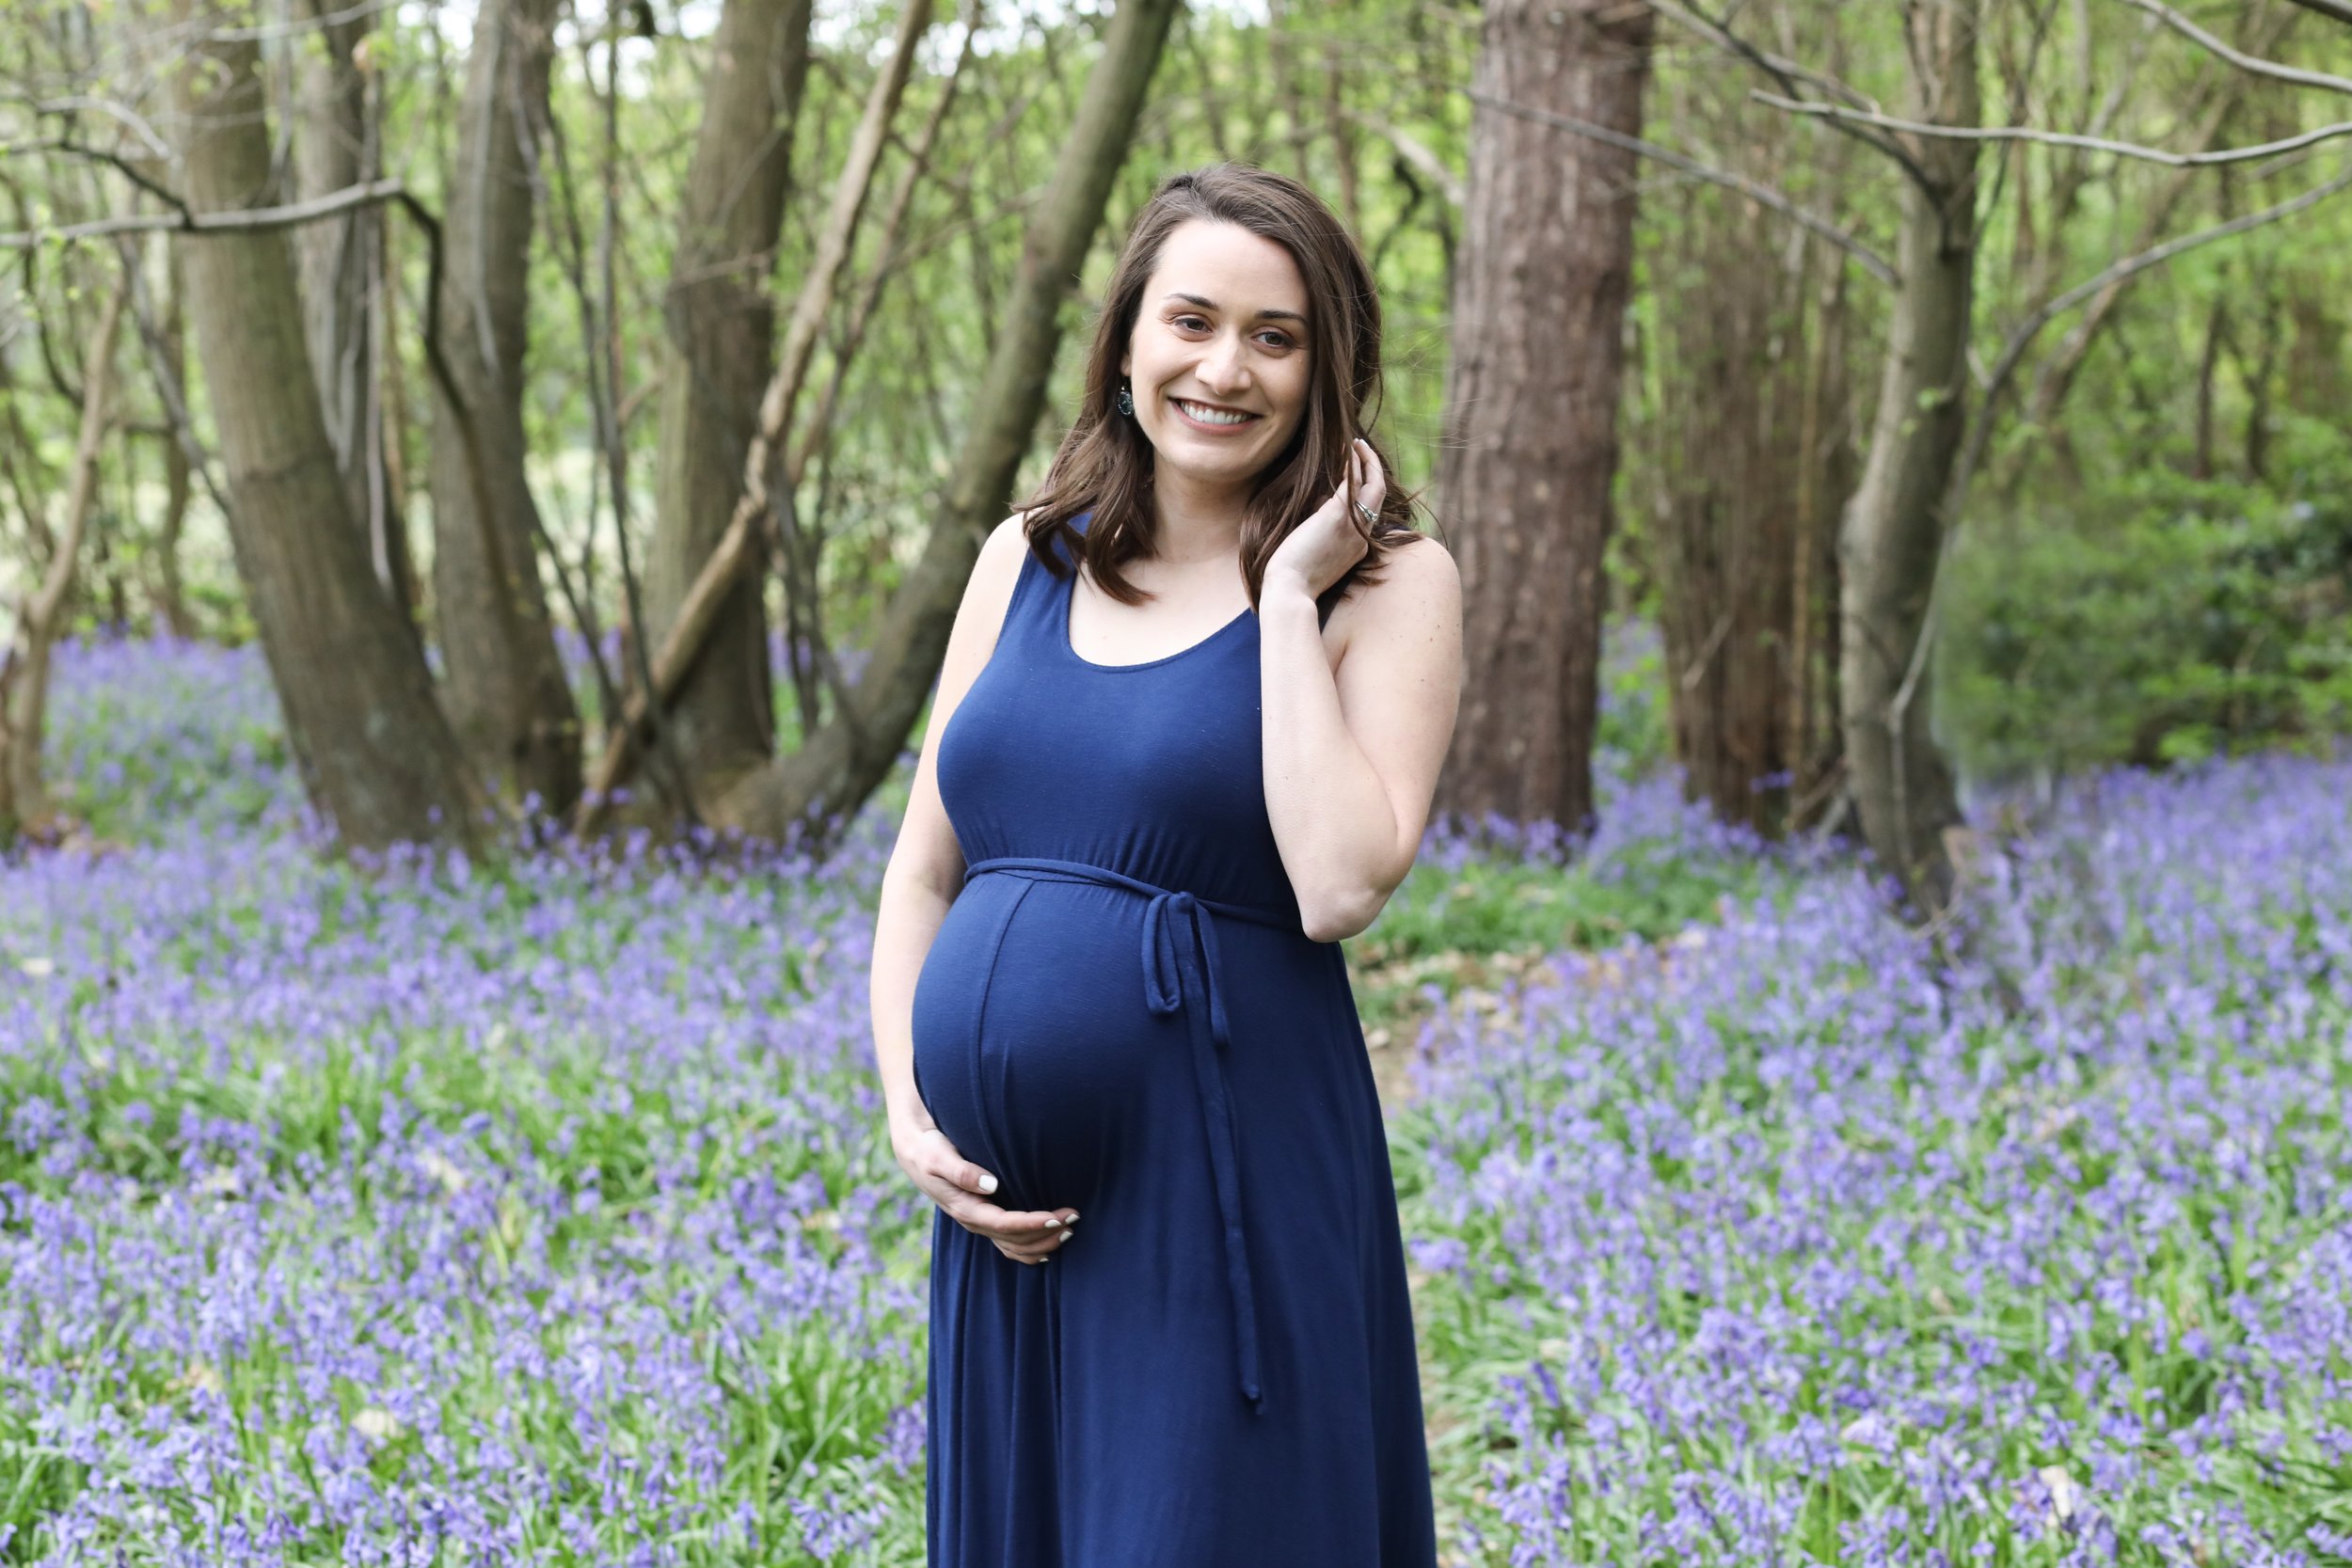 Maternity photo shoot in Berkshire | Bluebell pregnancy photos with Sarah & Bob114 choice .JPG